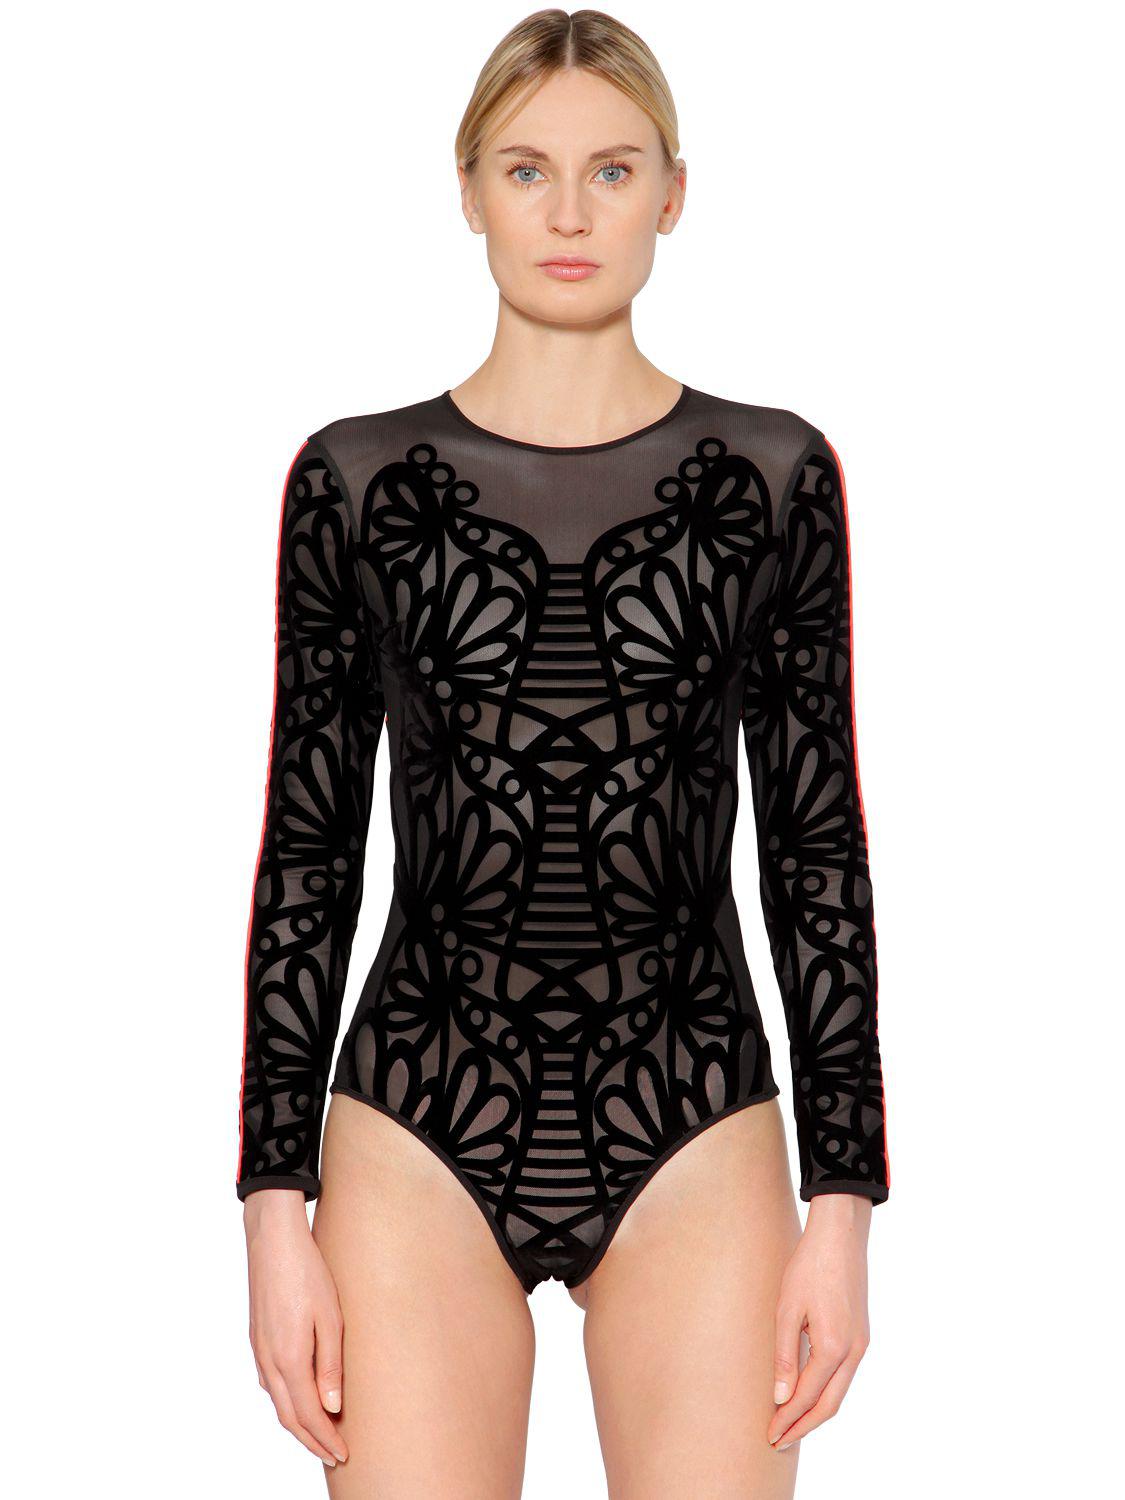 Puma Select Sophia Webster Sheer Bodysuit in Black - Lyst